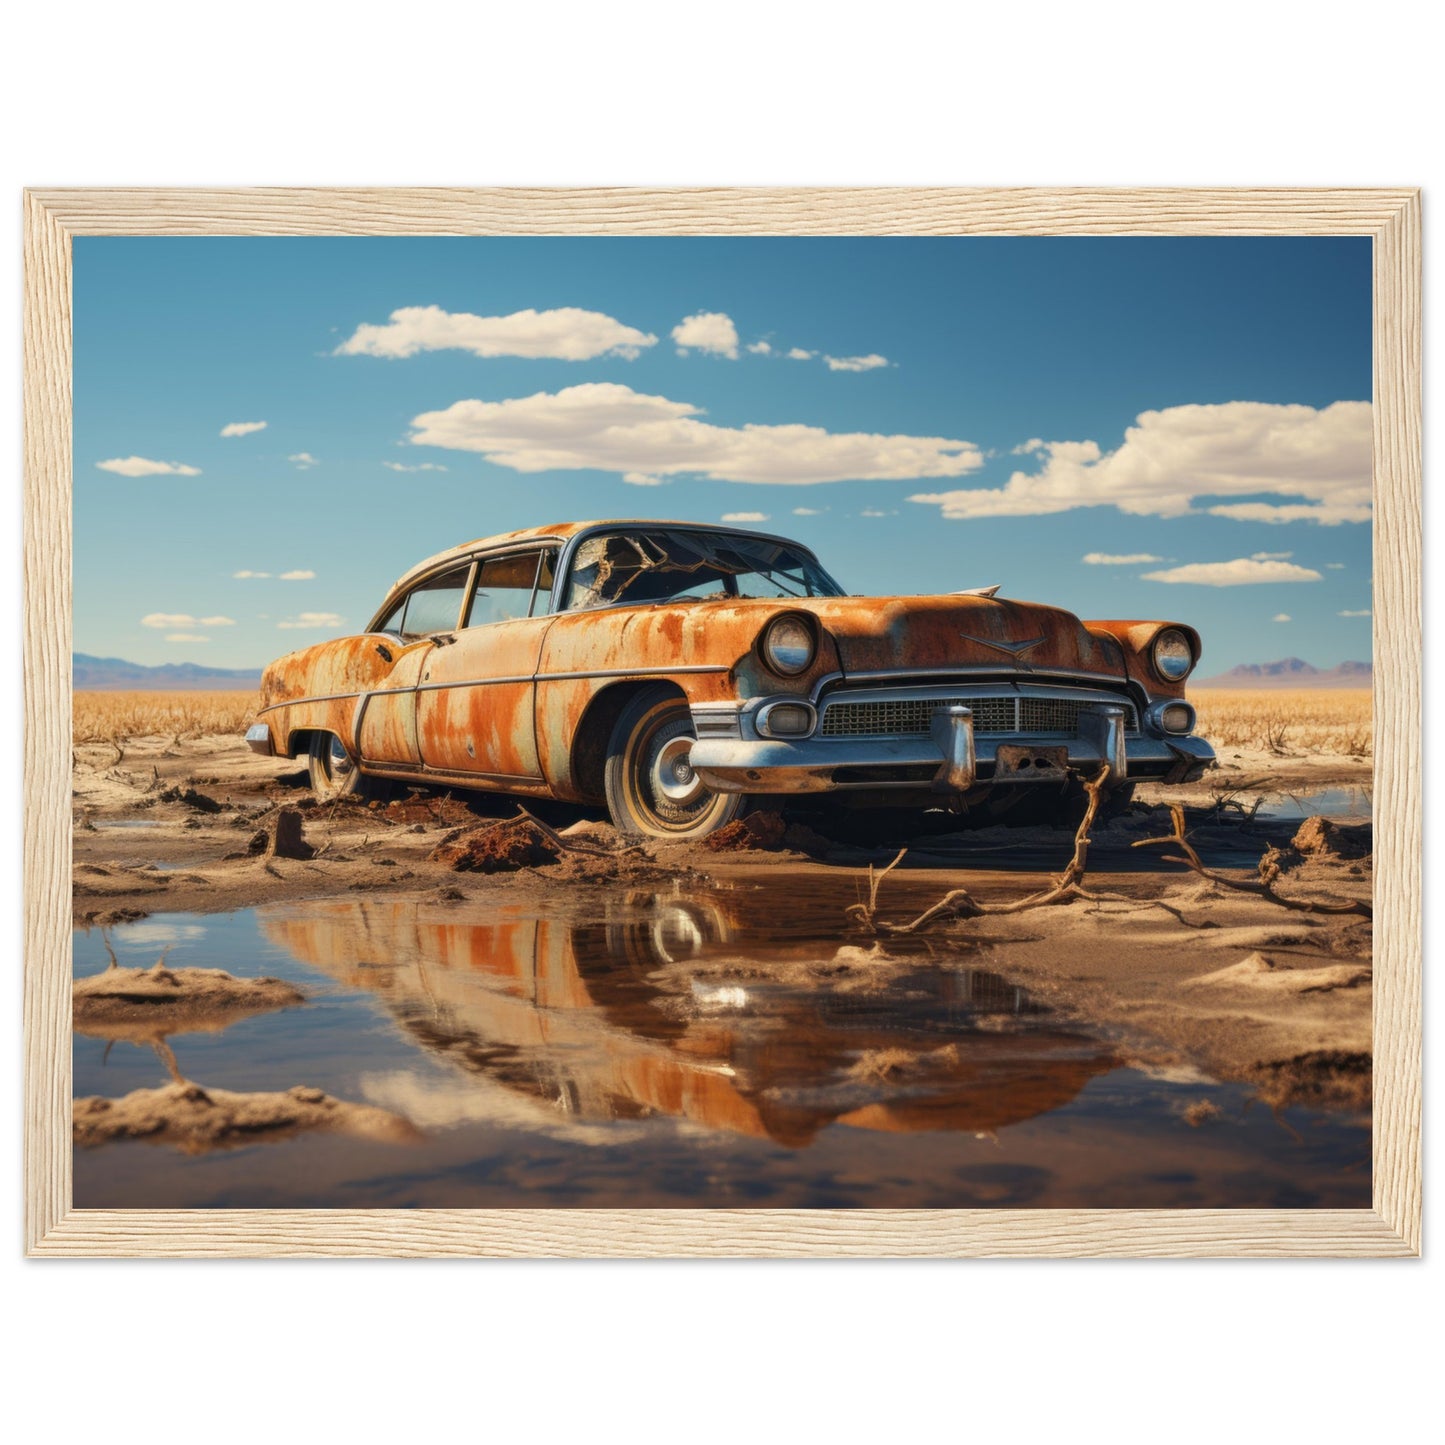 Rust - Photorealistic Wall Art Print Abandoned Car